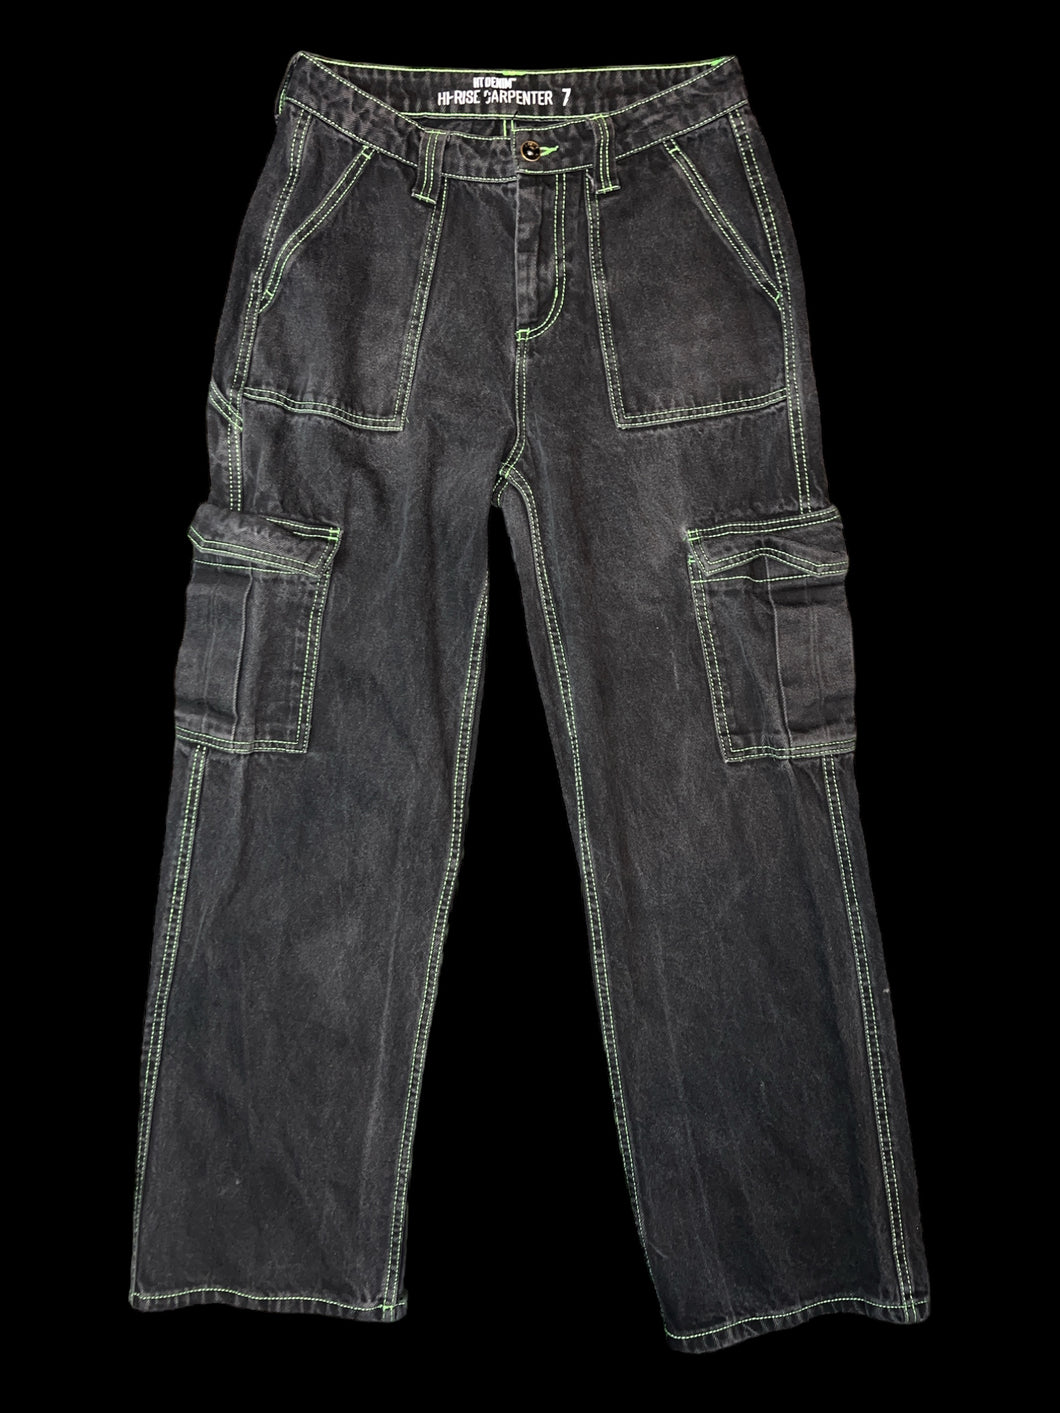 M Black denim straight leg cargo pants w/ green stitching details, belt loops, pockets, & zipper/button closure